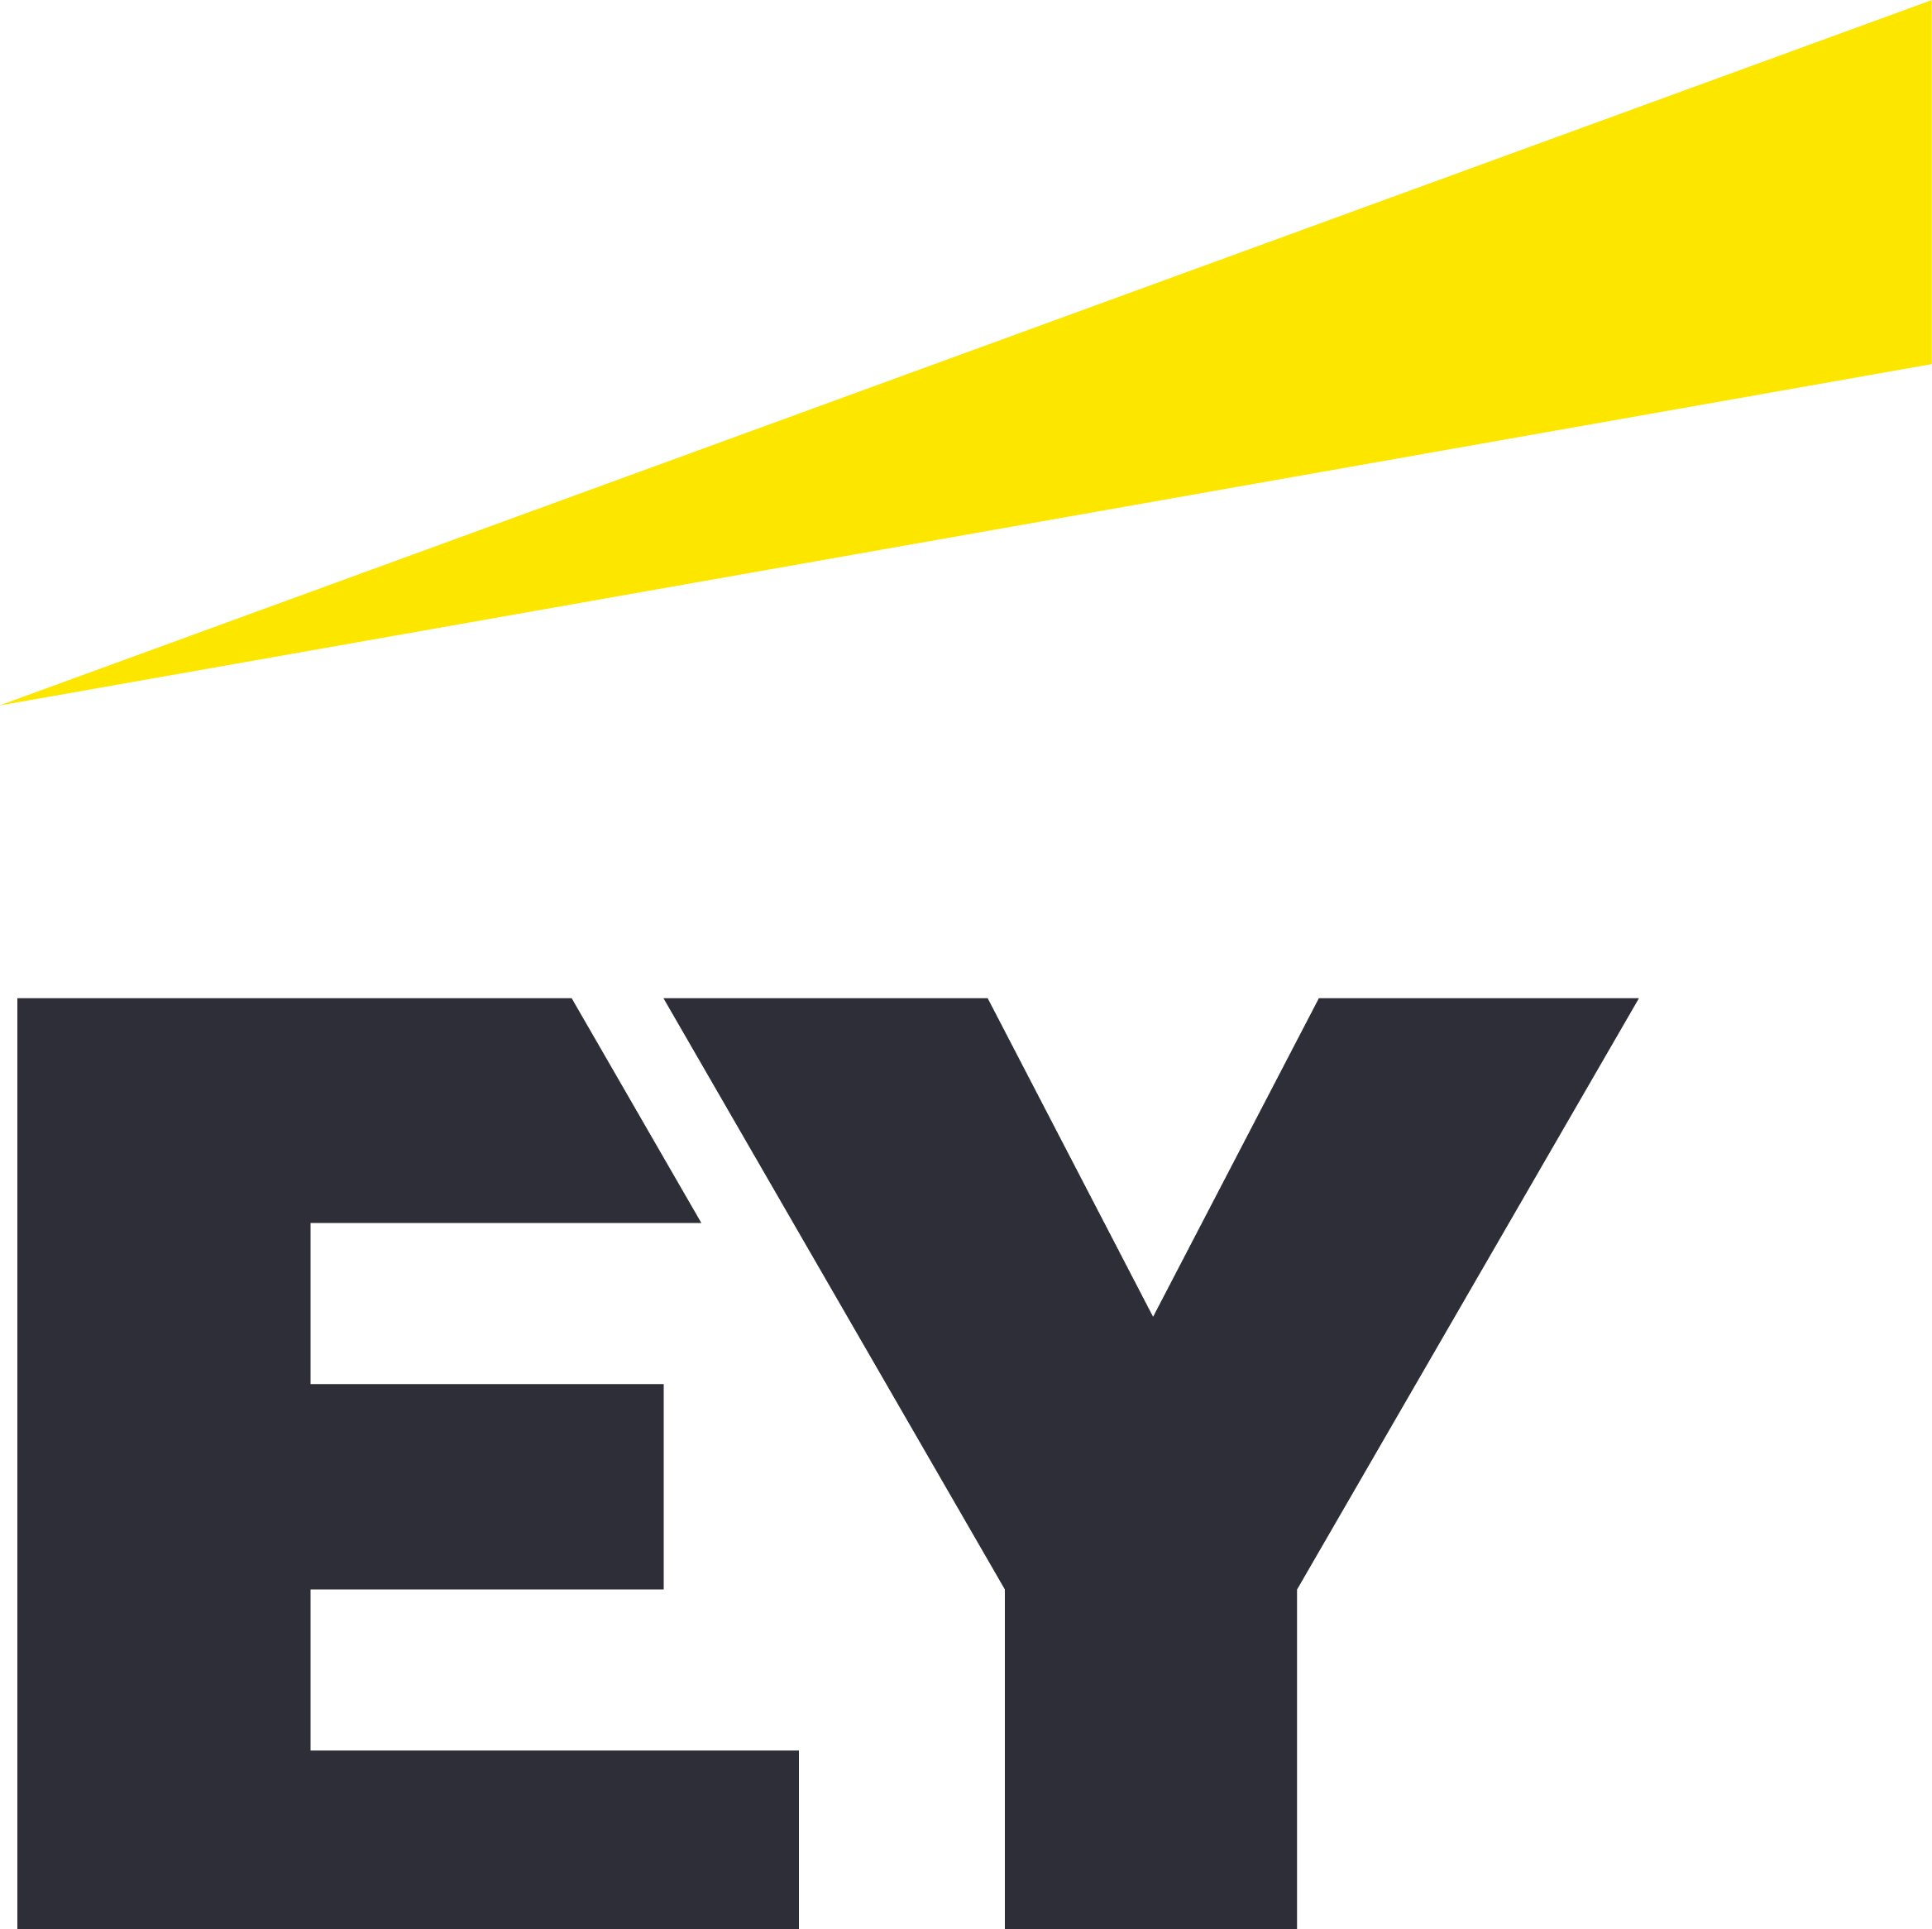 Ey Logo Beam Rgb